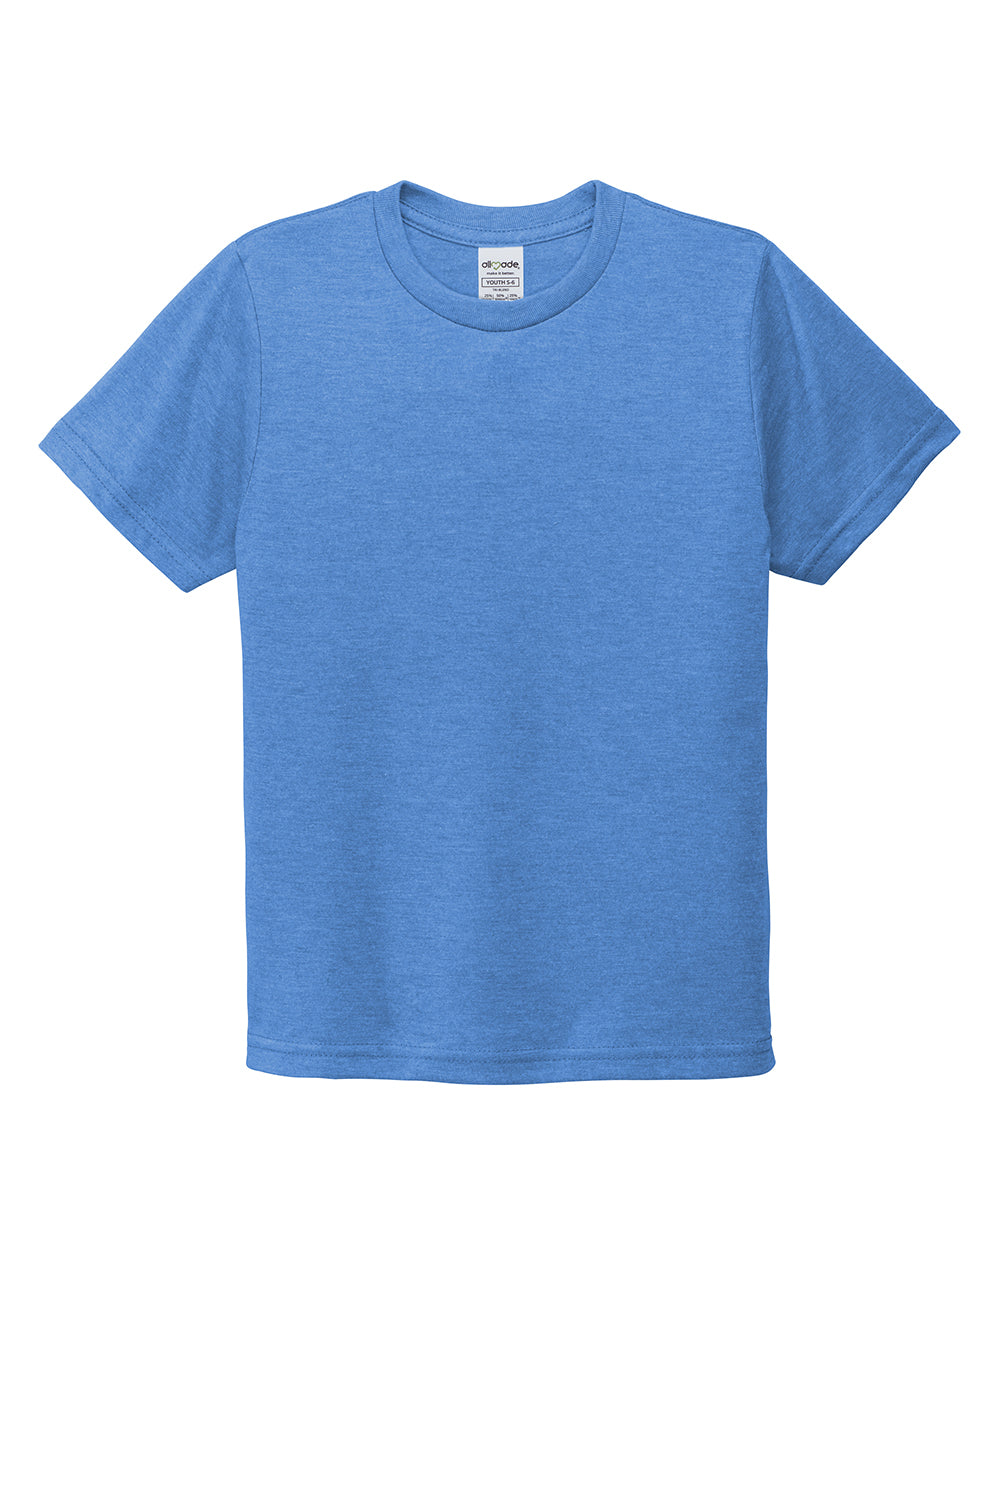 Allmade AL207 Youth Short Sleeve Crewneck T-Shirt Azure Blue Flat Front